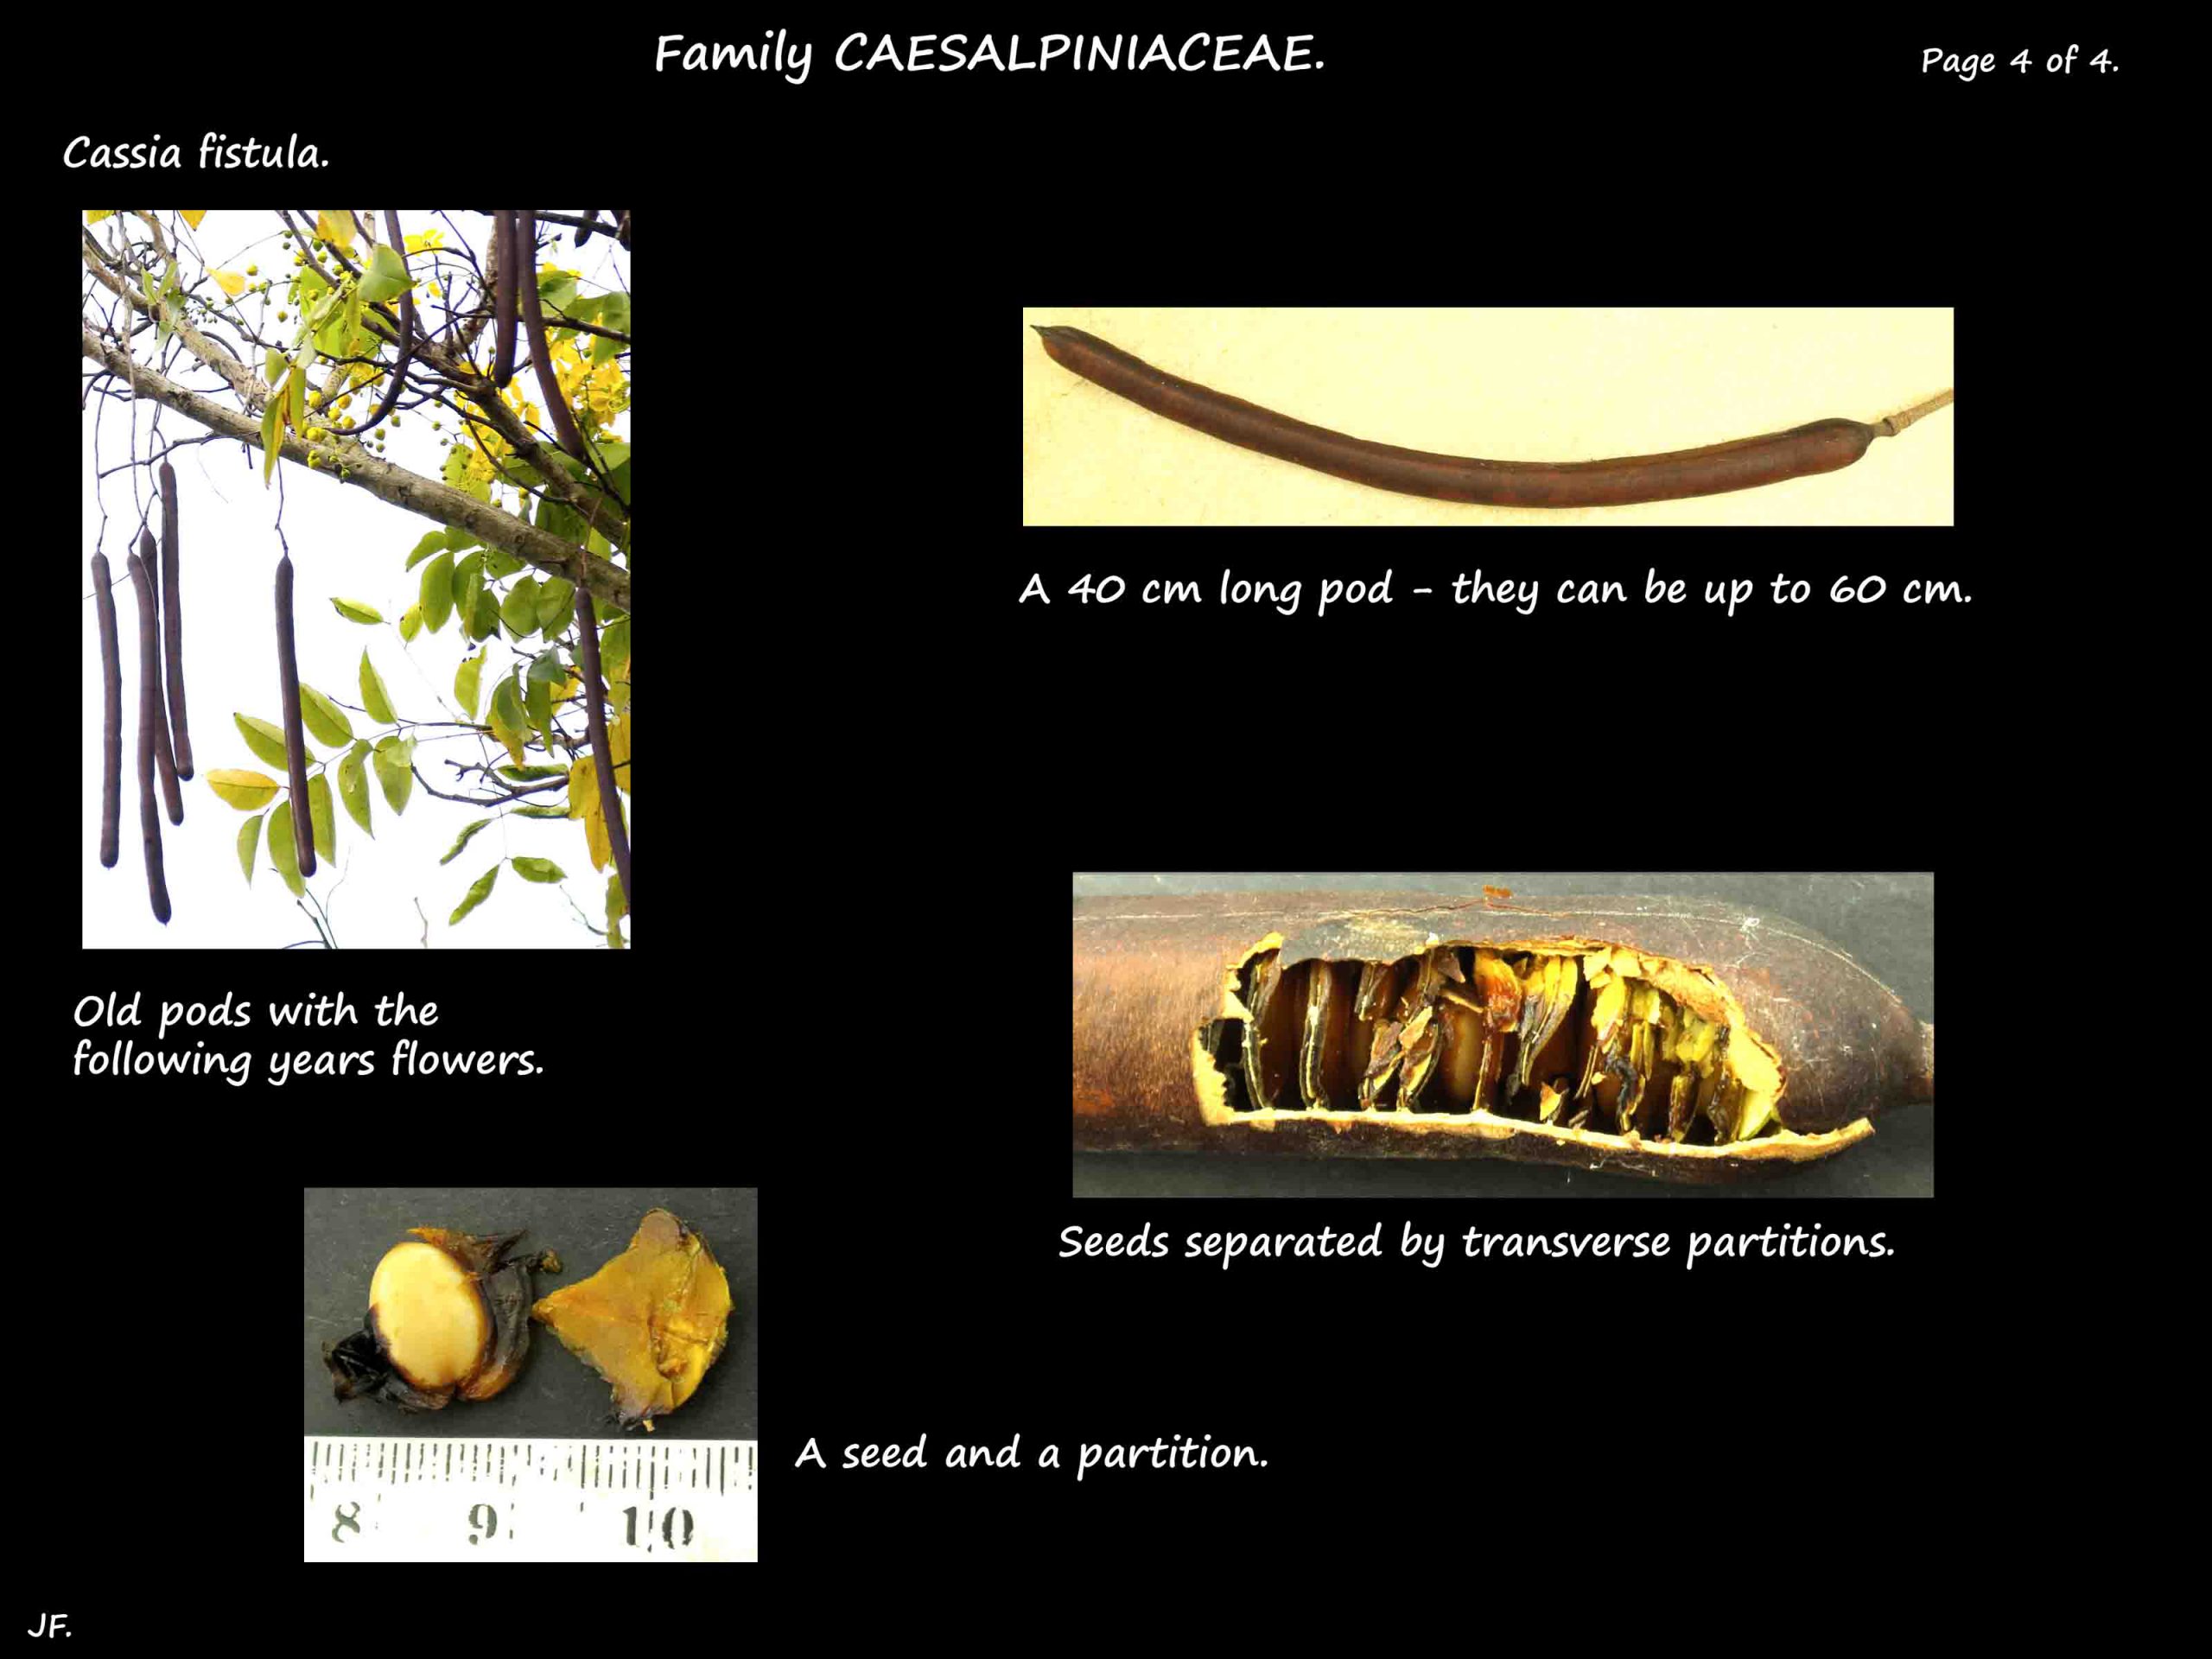 4 Cassia fistula pods